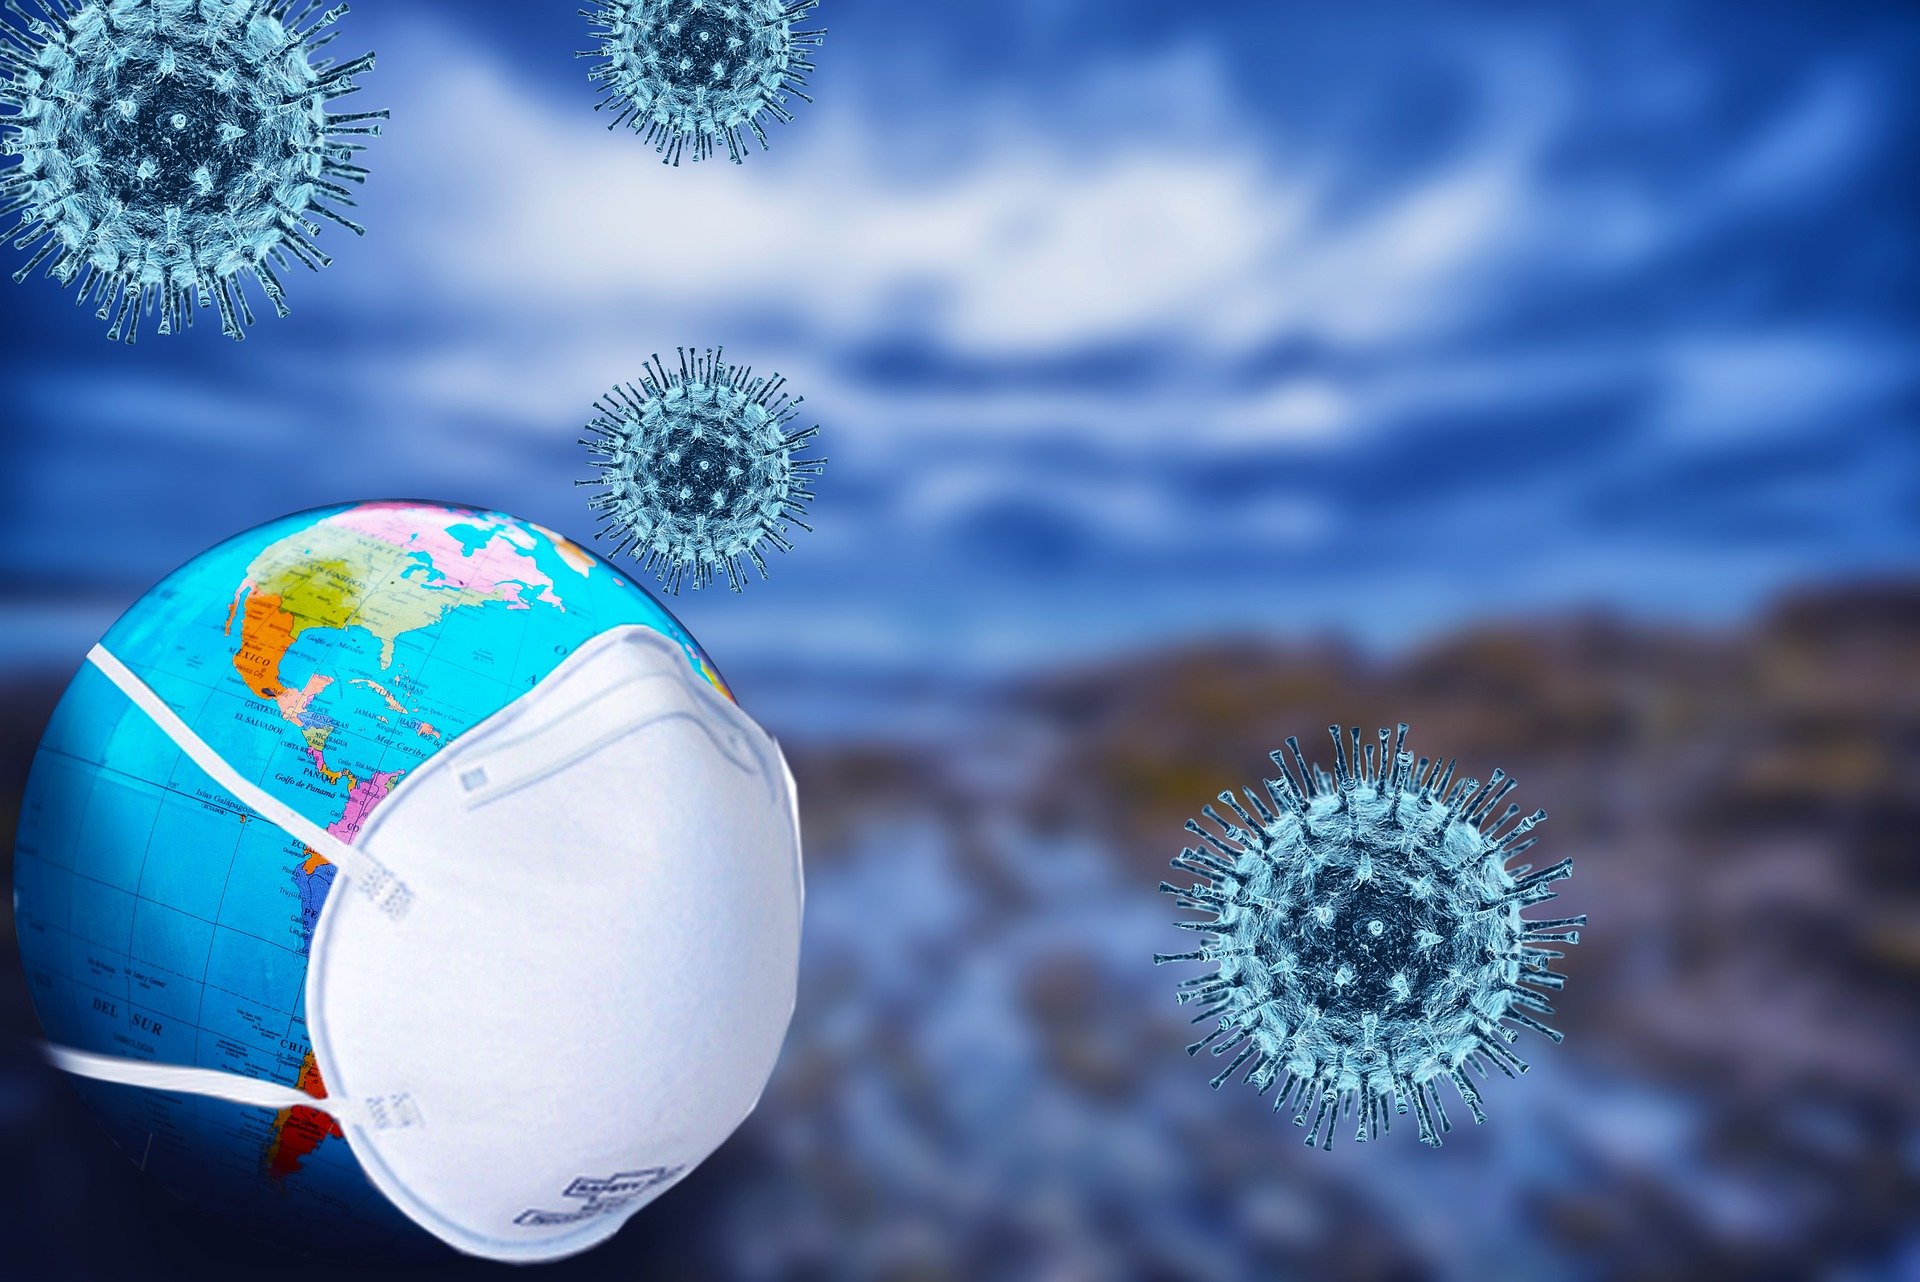 An illustration to encourage the wearing of masks amid the coronavirus pandemic. | Photo: Pixabay.